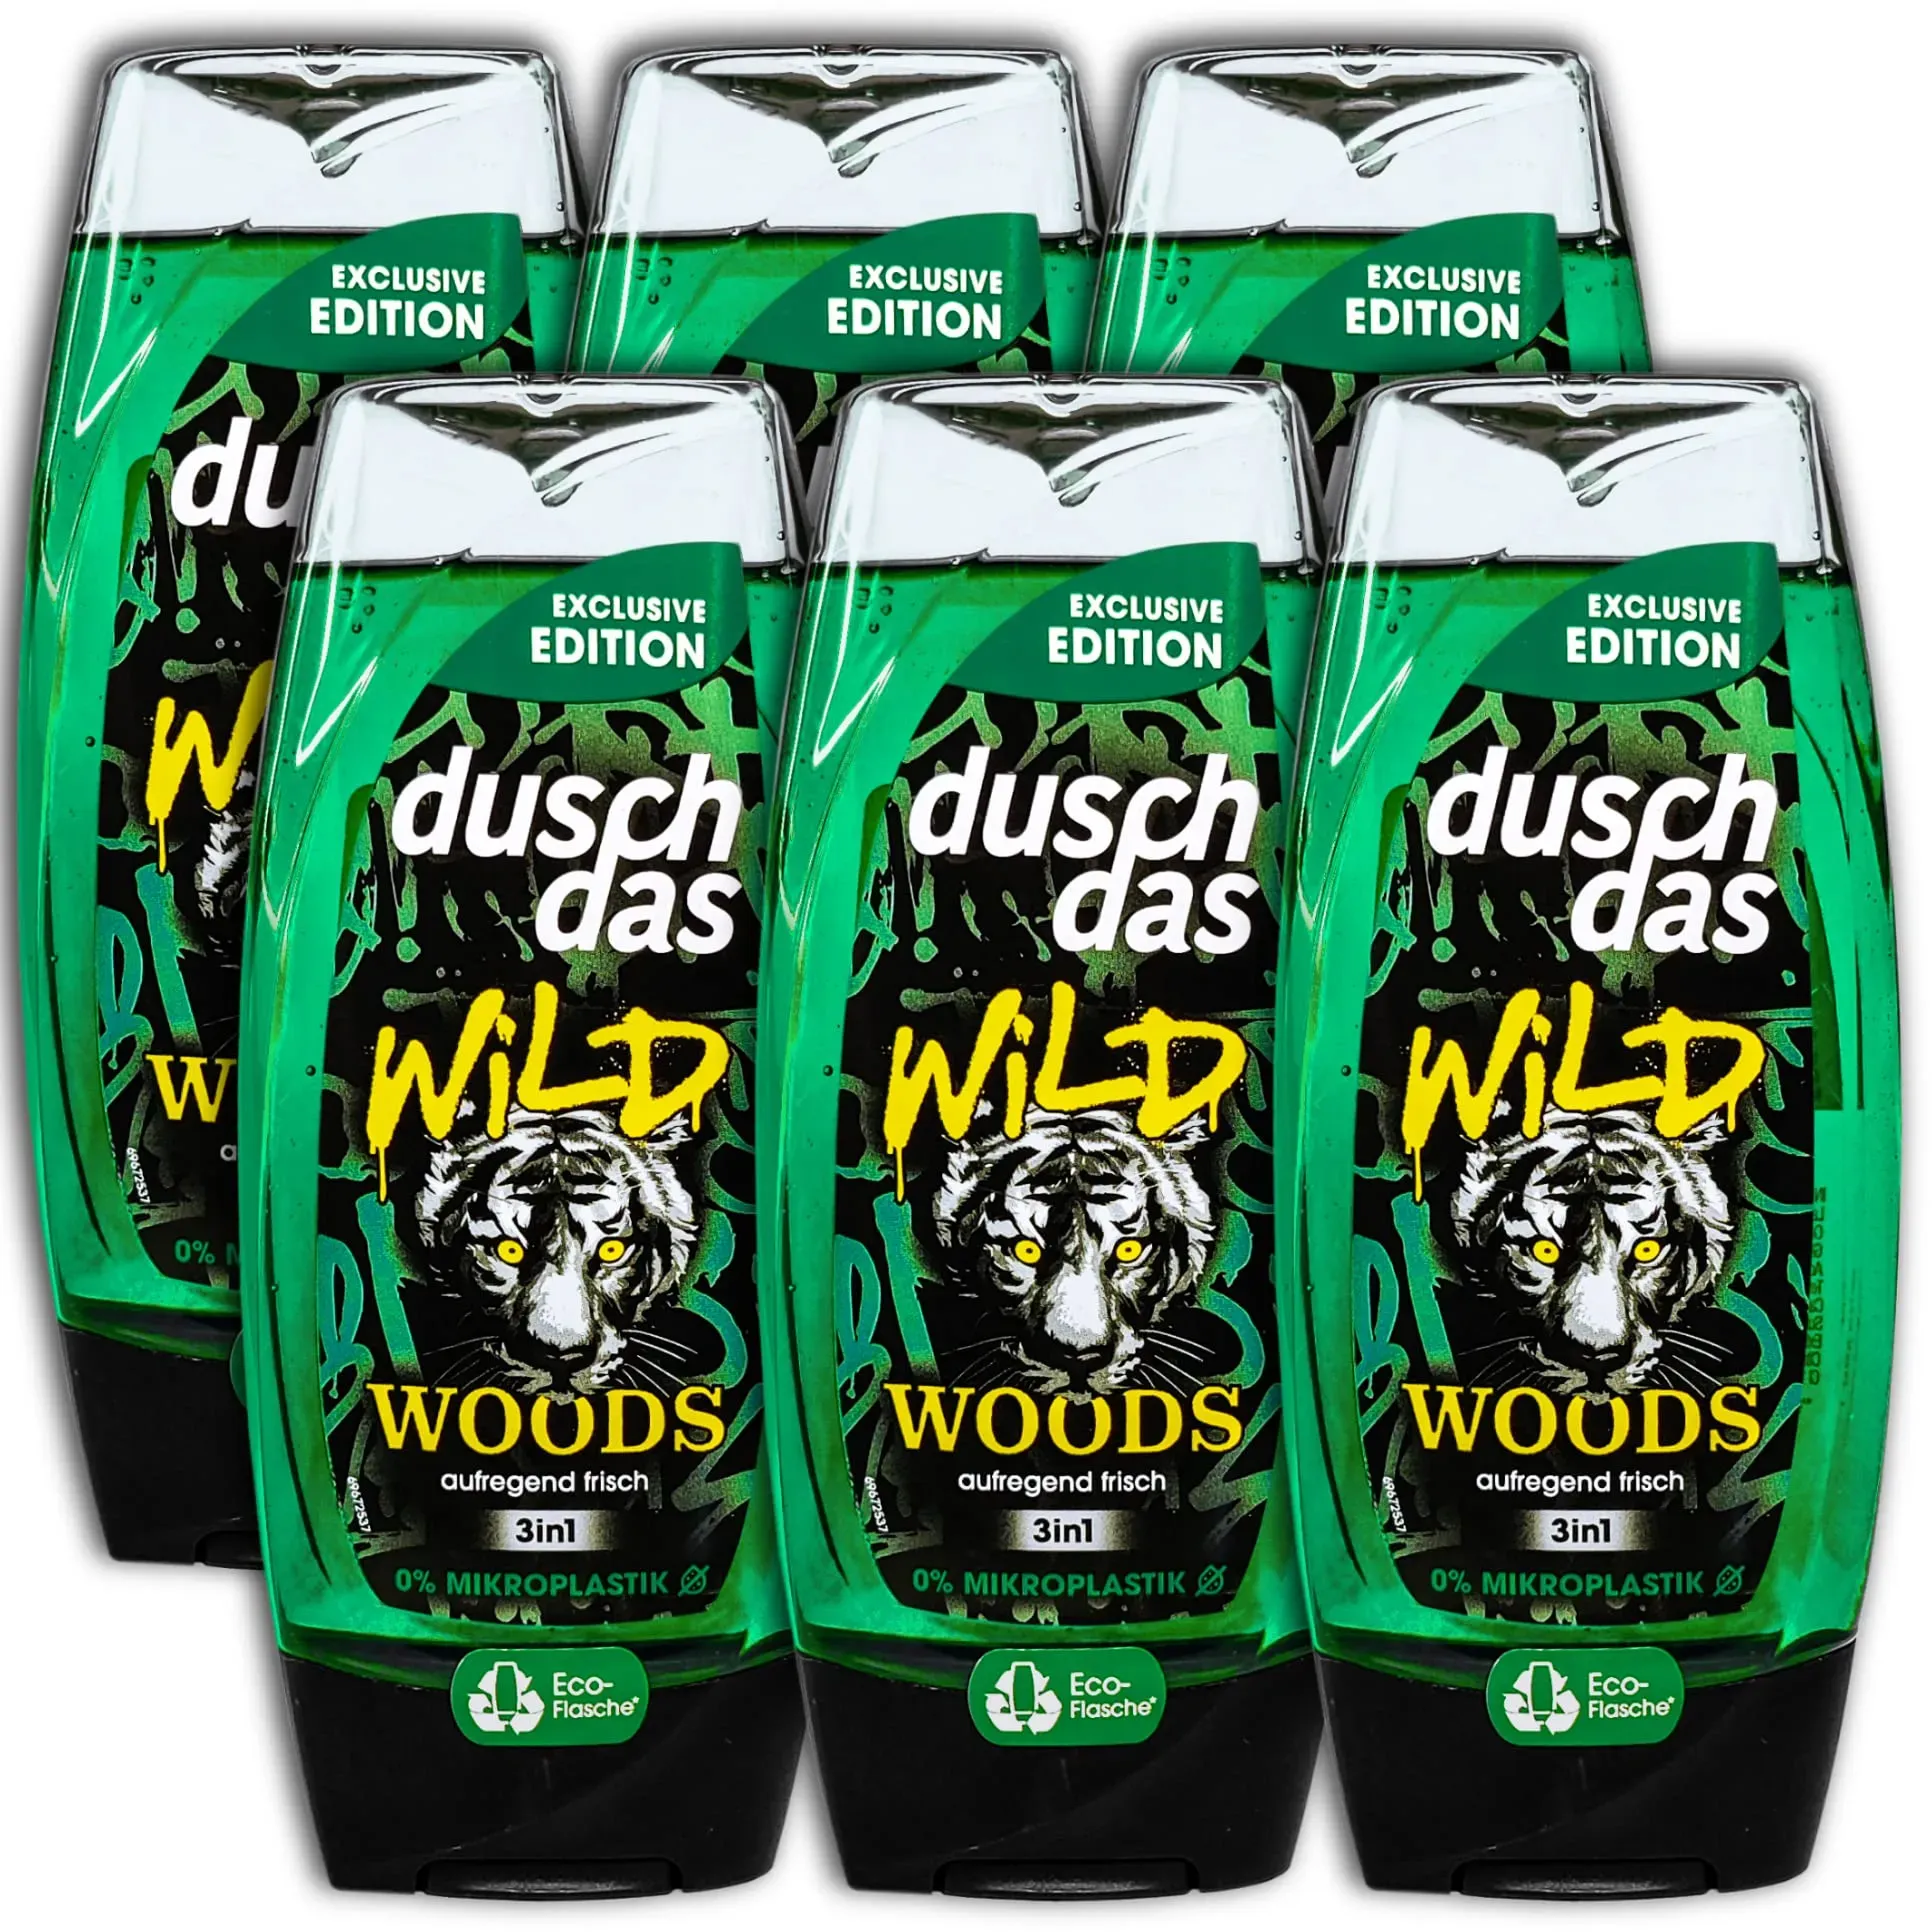 6 er Pack Duschdas Duschgel Wild Woods 3in1 Shower Gel 6 x 225 ml